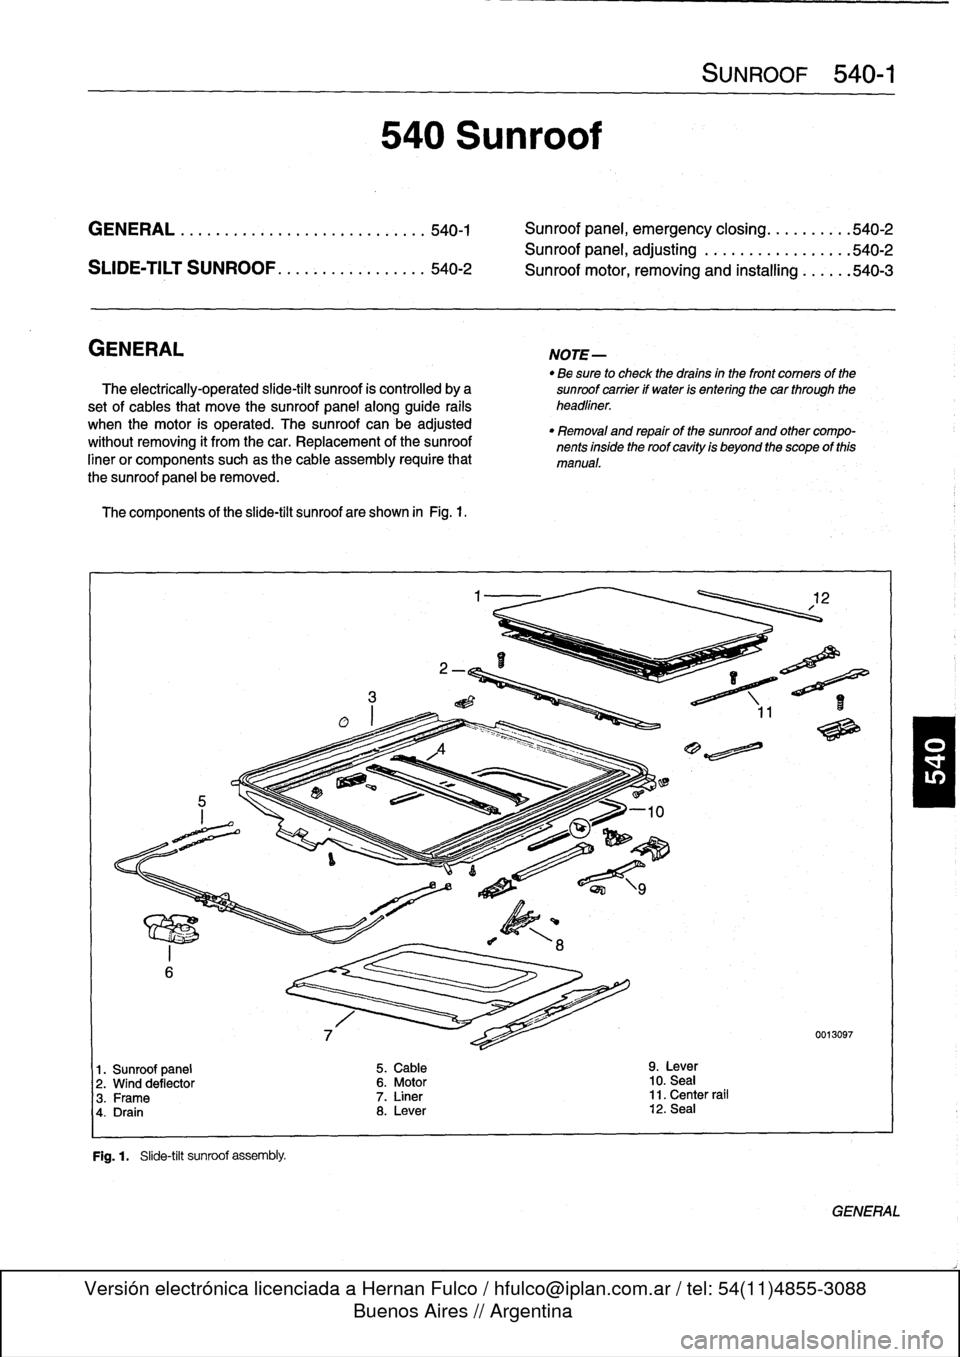 BMW M3 1992 E36 Workshop Manual 
GENERAL
...
.
.
.
.
.
................
.
.
.
.
540-1

	

Sunroof
panel,
emergency
closing
.......
.
.
.540-2

Sunroof
panel,
adjusting
..
.
...........
.
.
.540-2

SUDE-TILT
SUNROOF
.
.
.
.
.
.
.
.
.